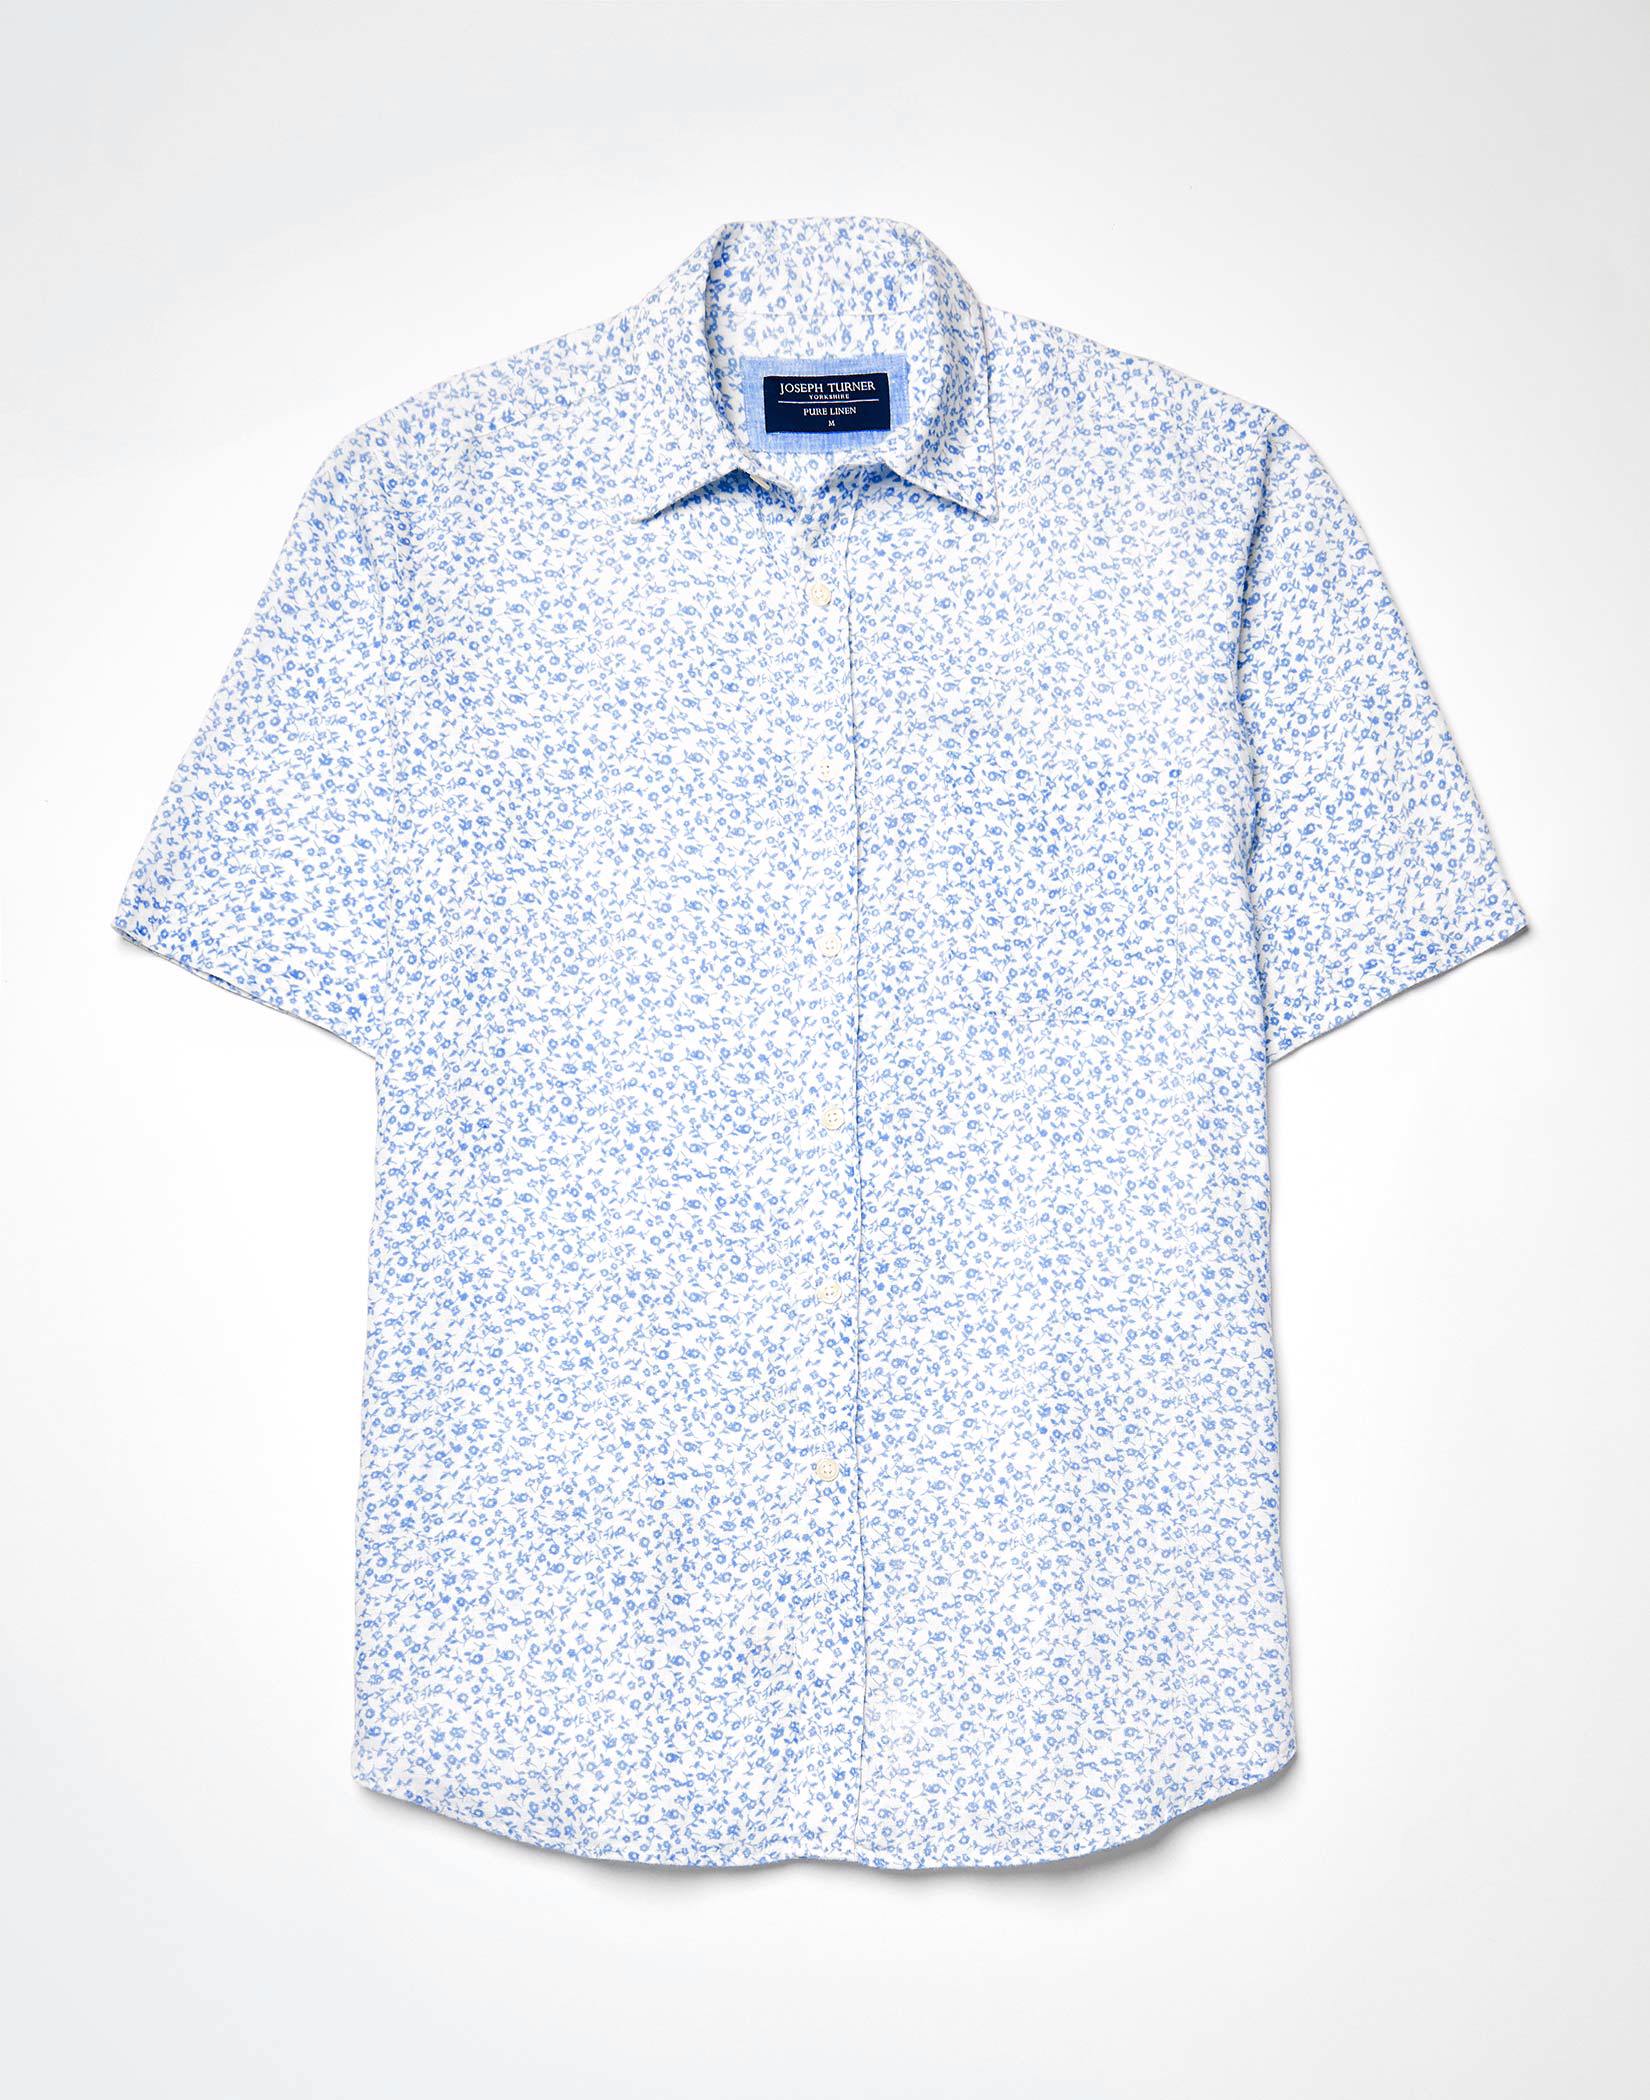 Linen Shirt Short Sleeve - Blue/White Floral